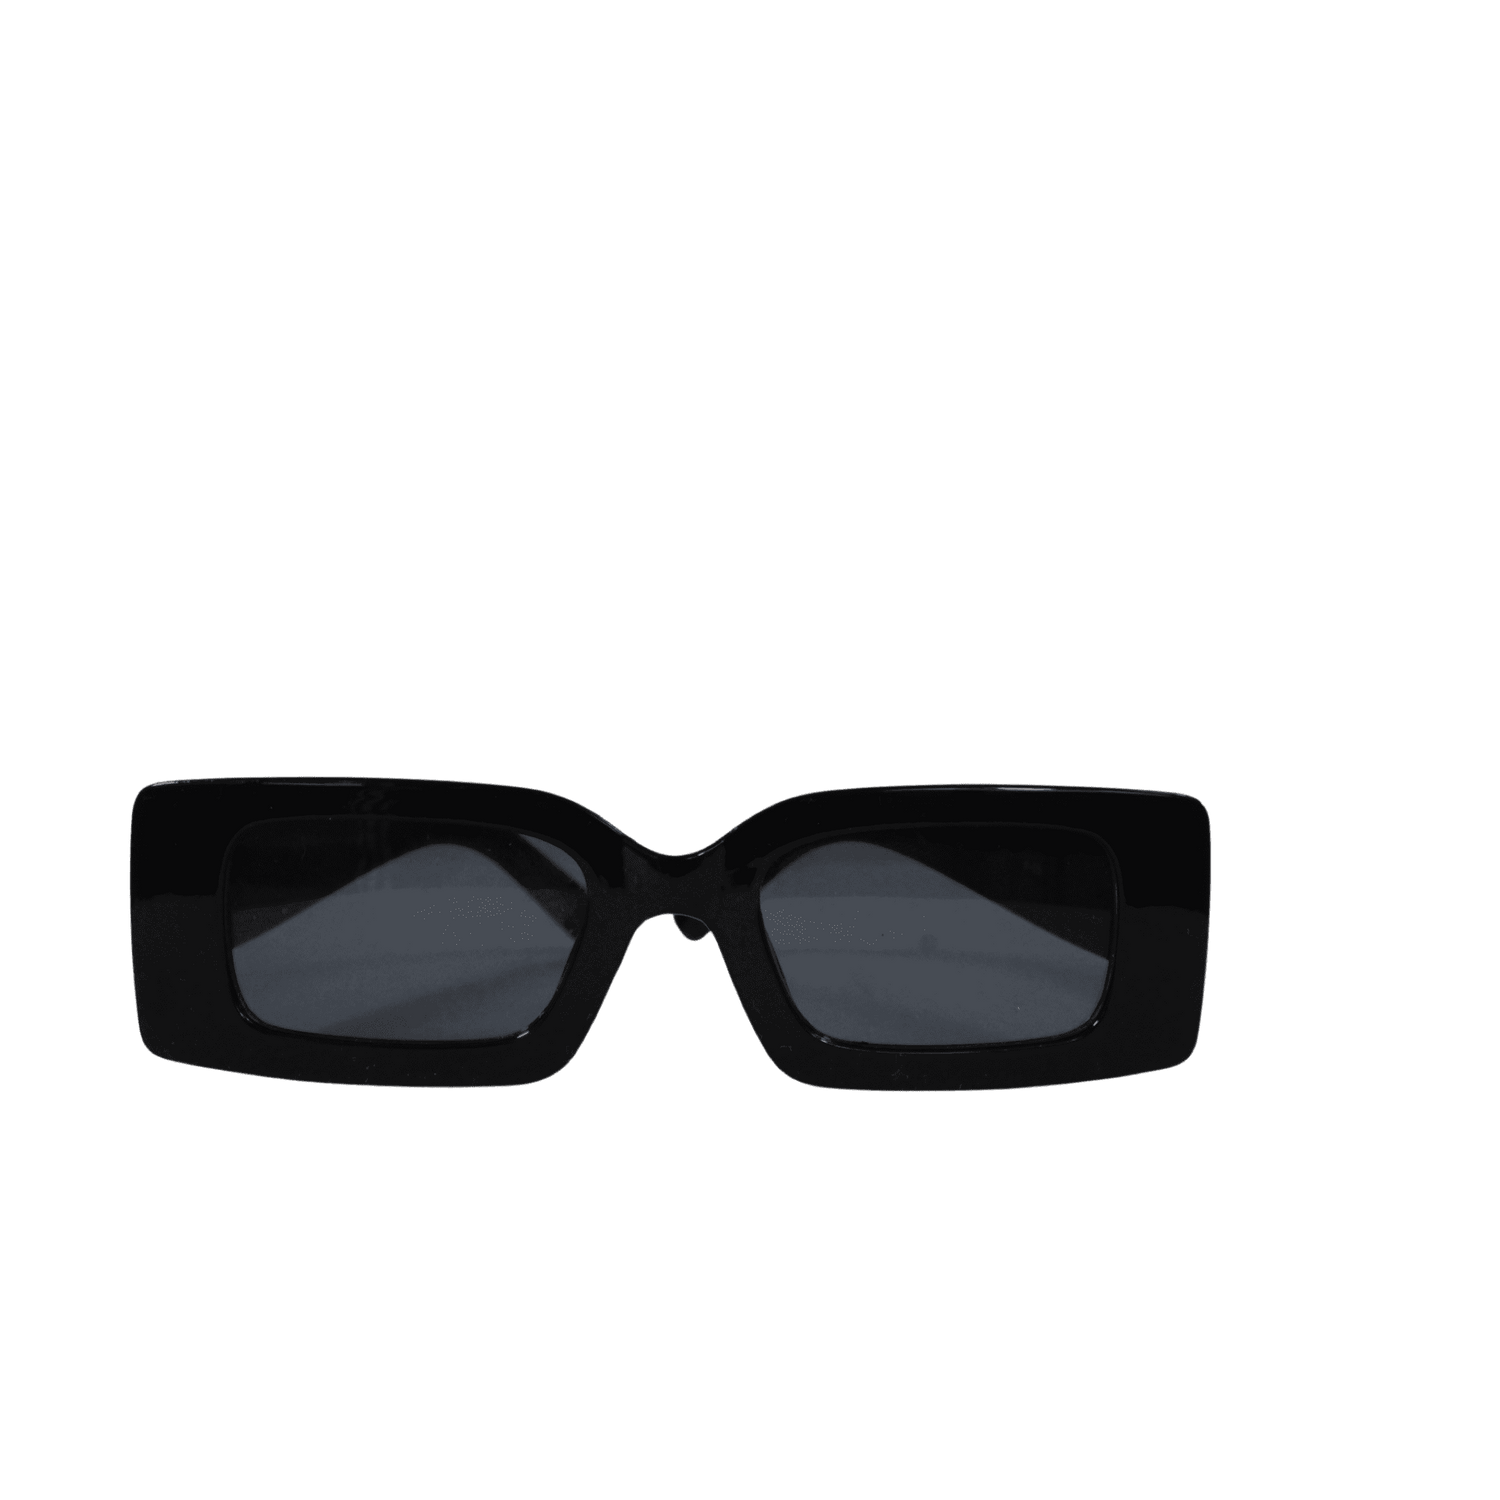 Accesorios-femenino-gafas